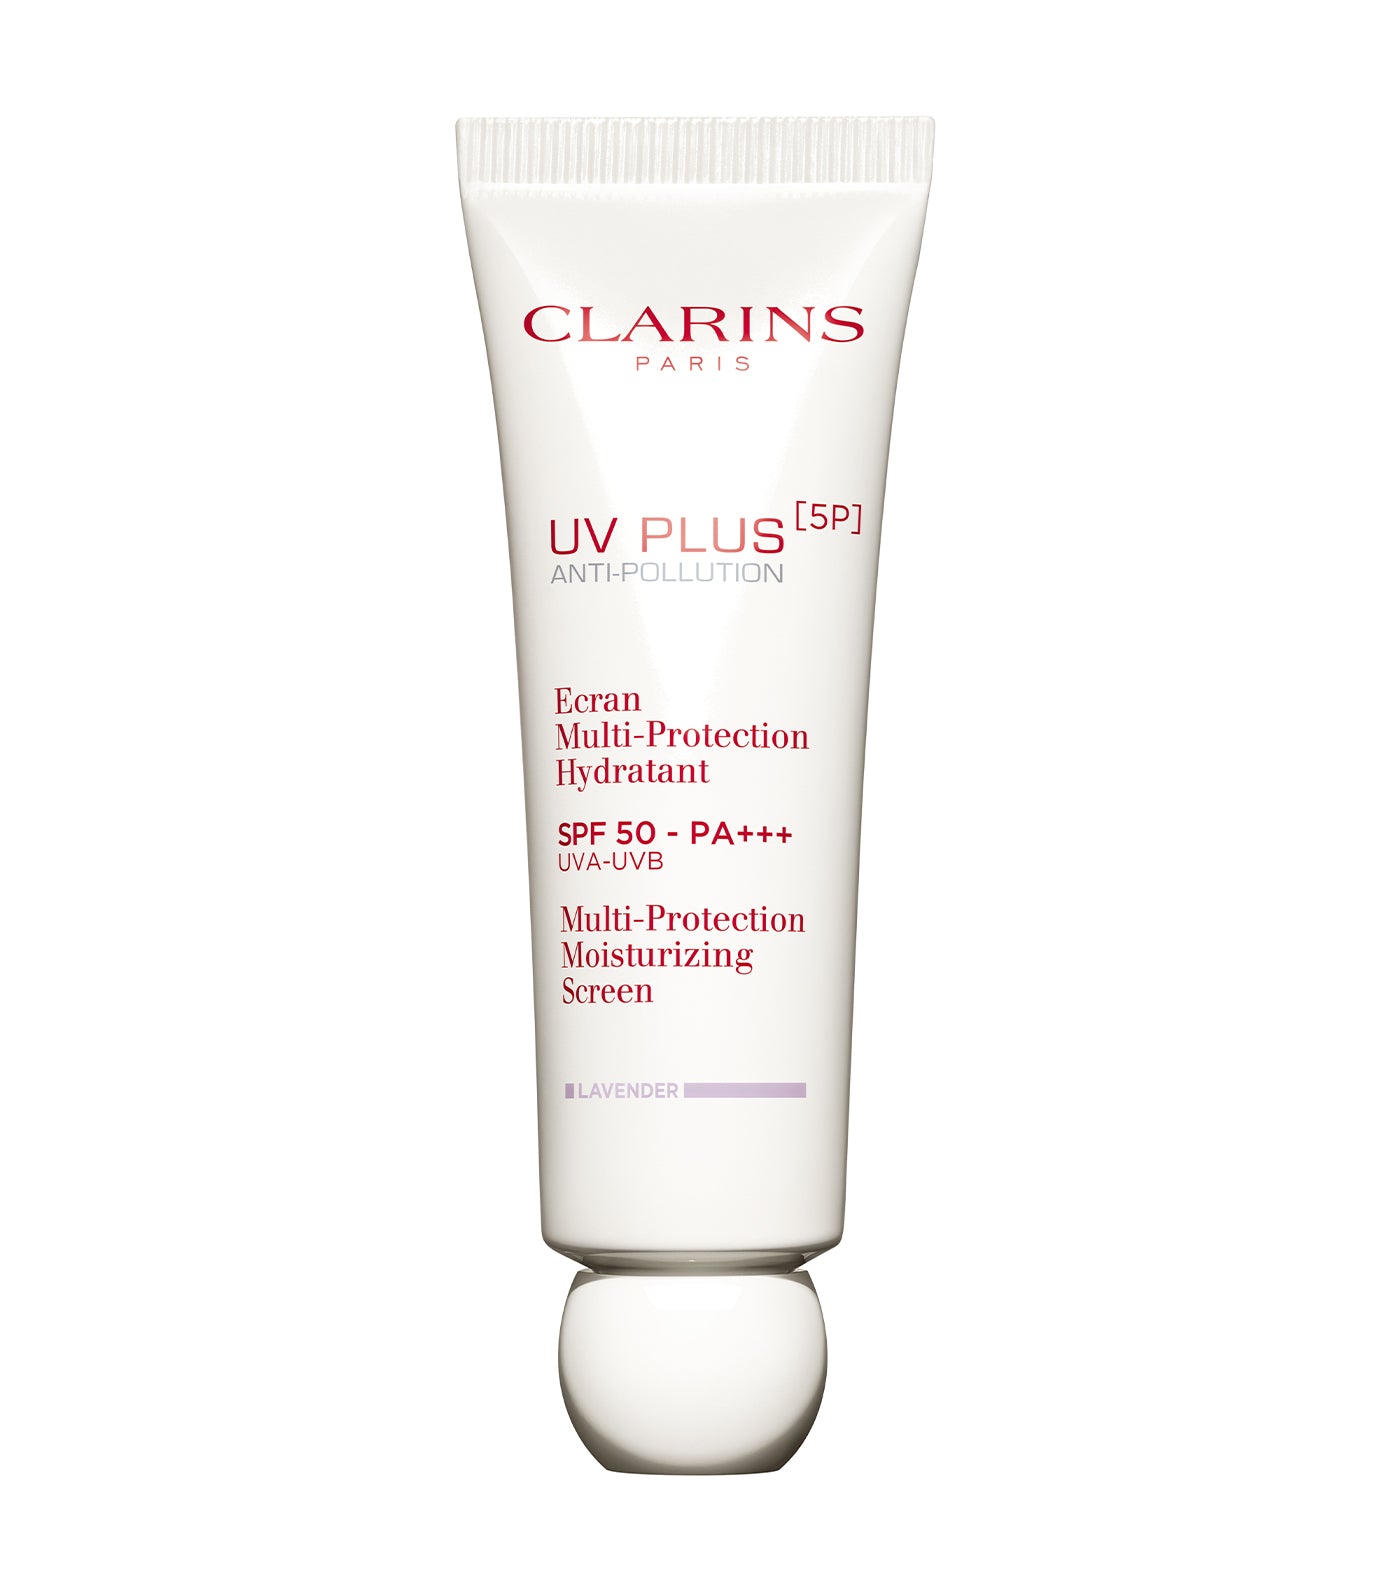 Clarins UV Plus [5P] Anti-Pollution SPF50/PA+++ lavender